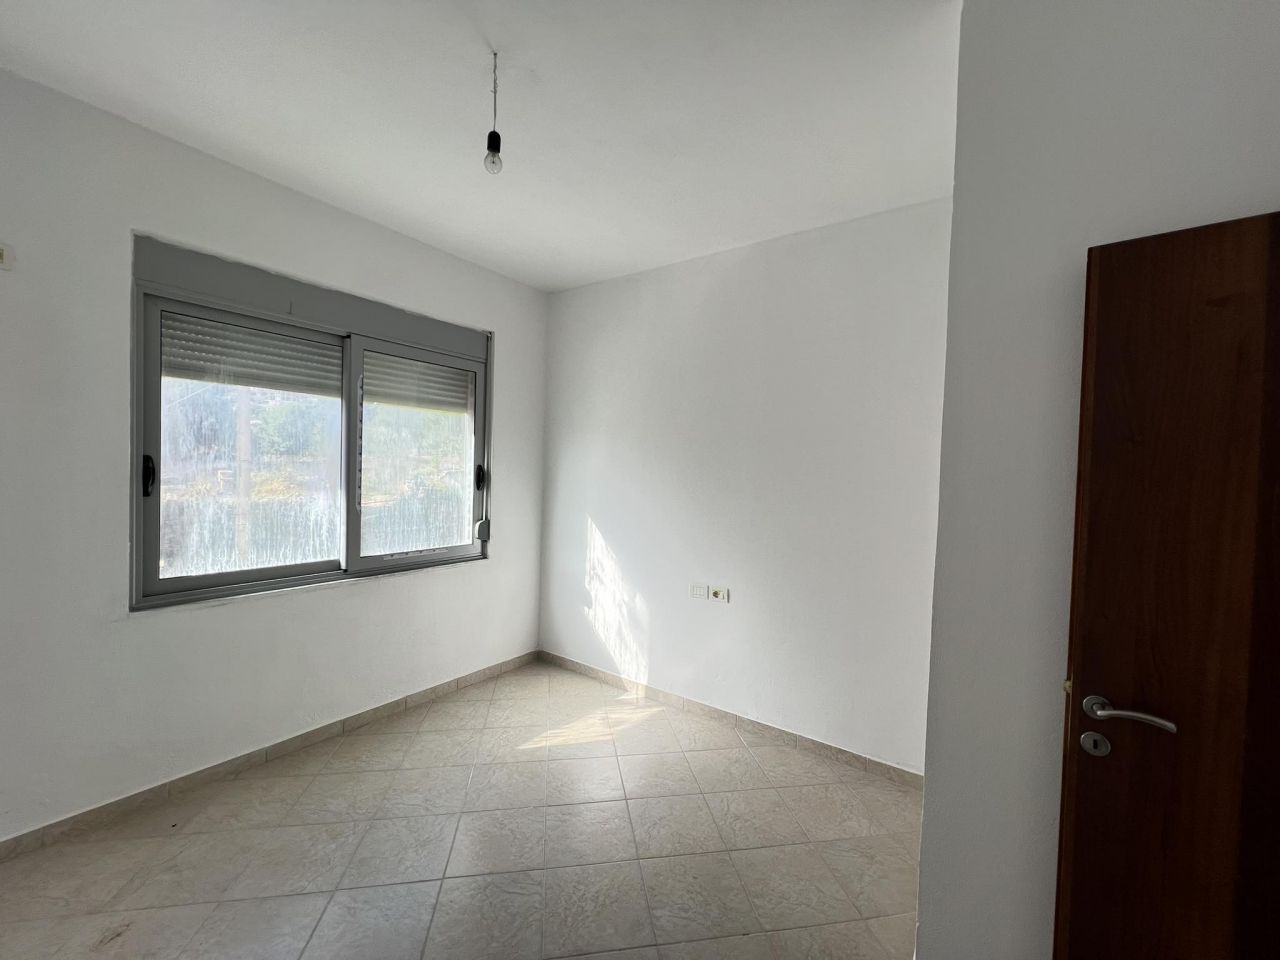 Two Bedroom Apartment For Sale In Saranda Albania 